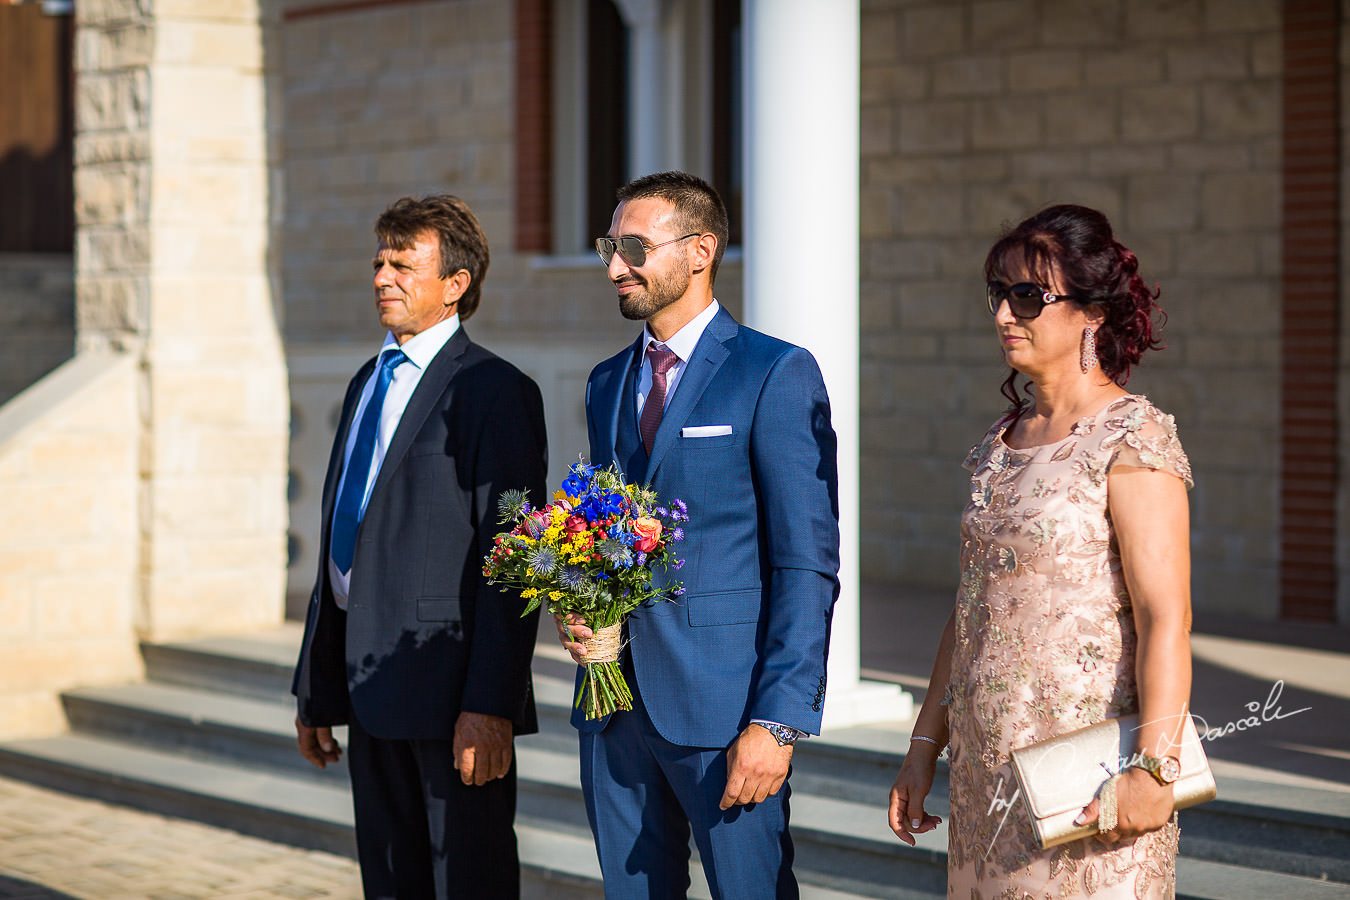 Moments captured by Cyprus Wedding Photographer Cristian Dascalu at a beautiful wedding in Larnaka, Cyprus.